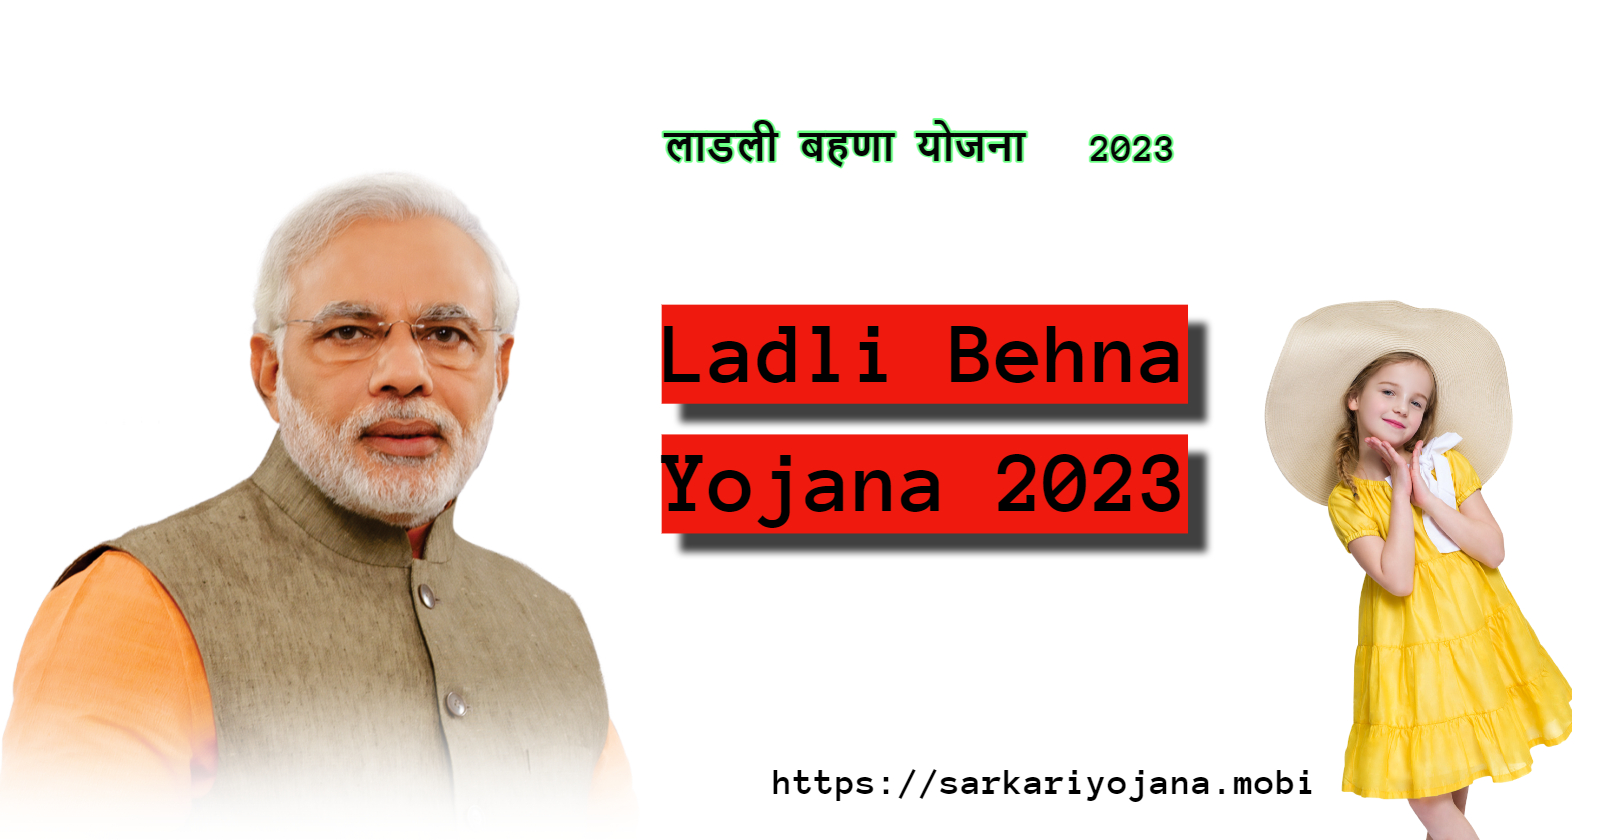 Ladli Behna Yojana 2023